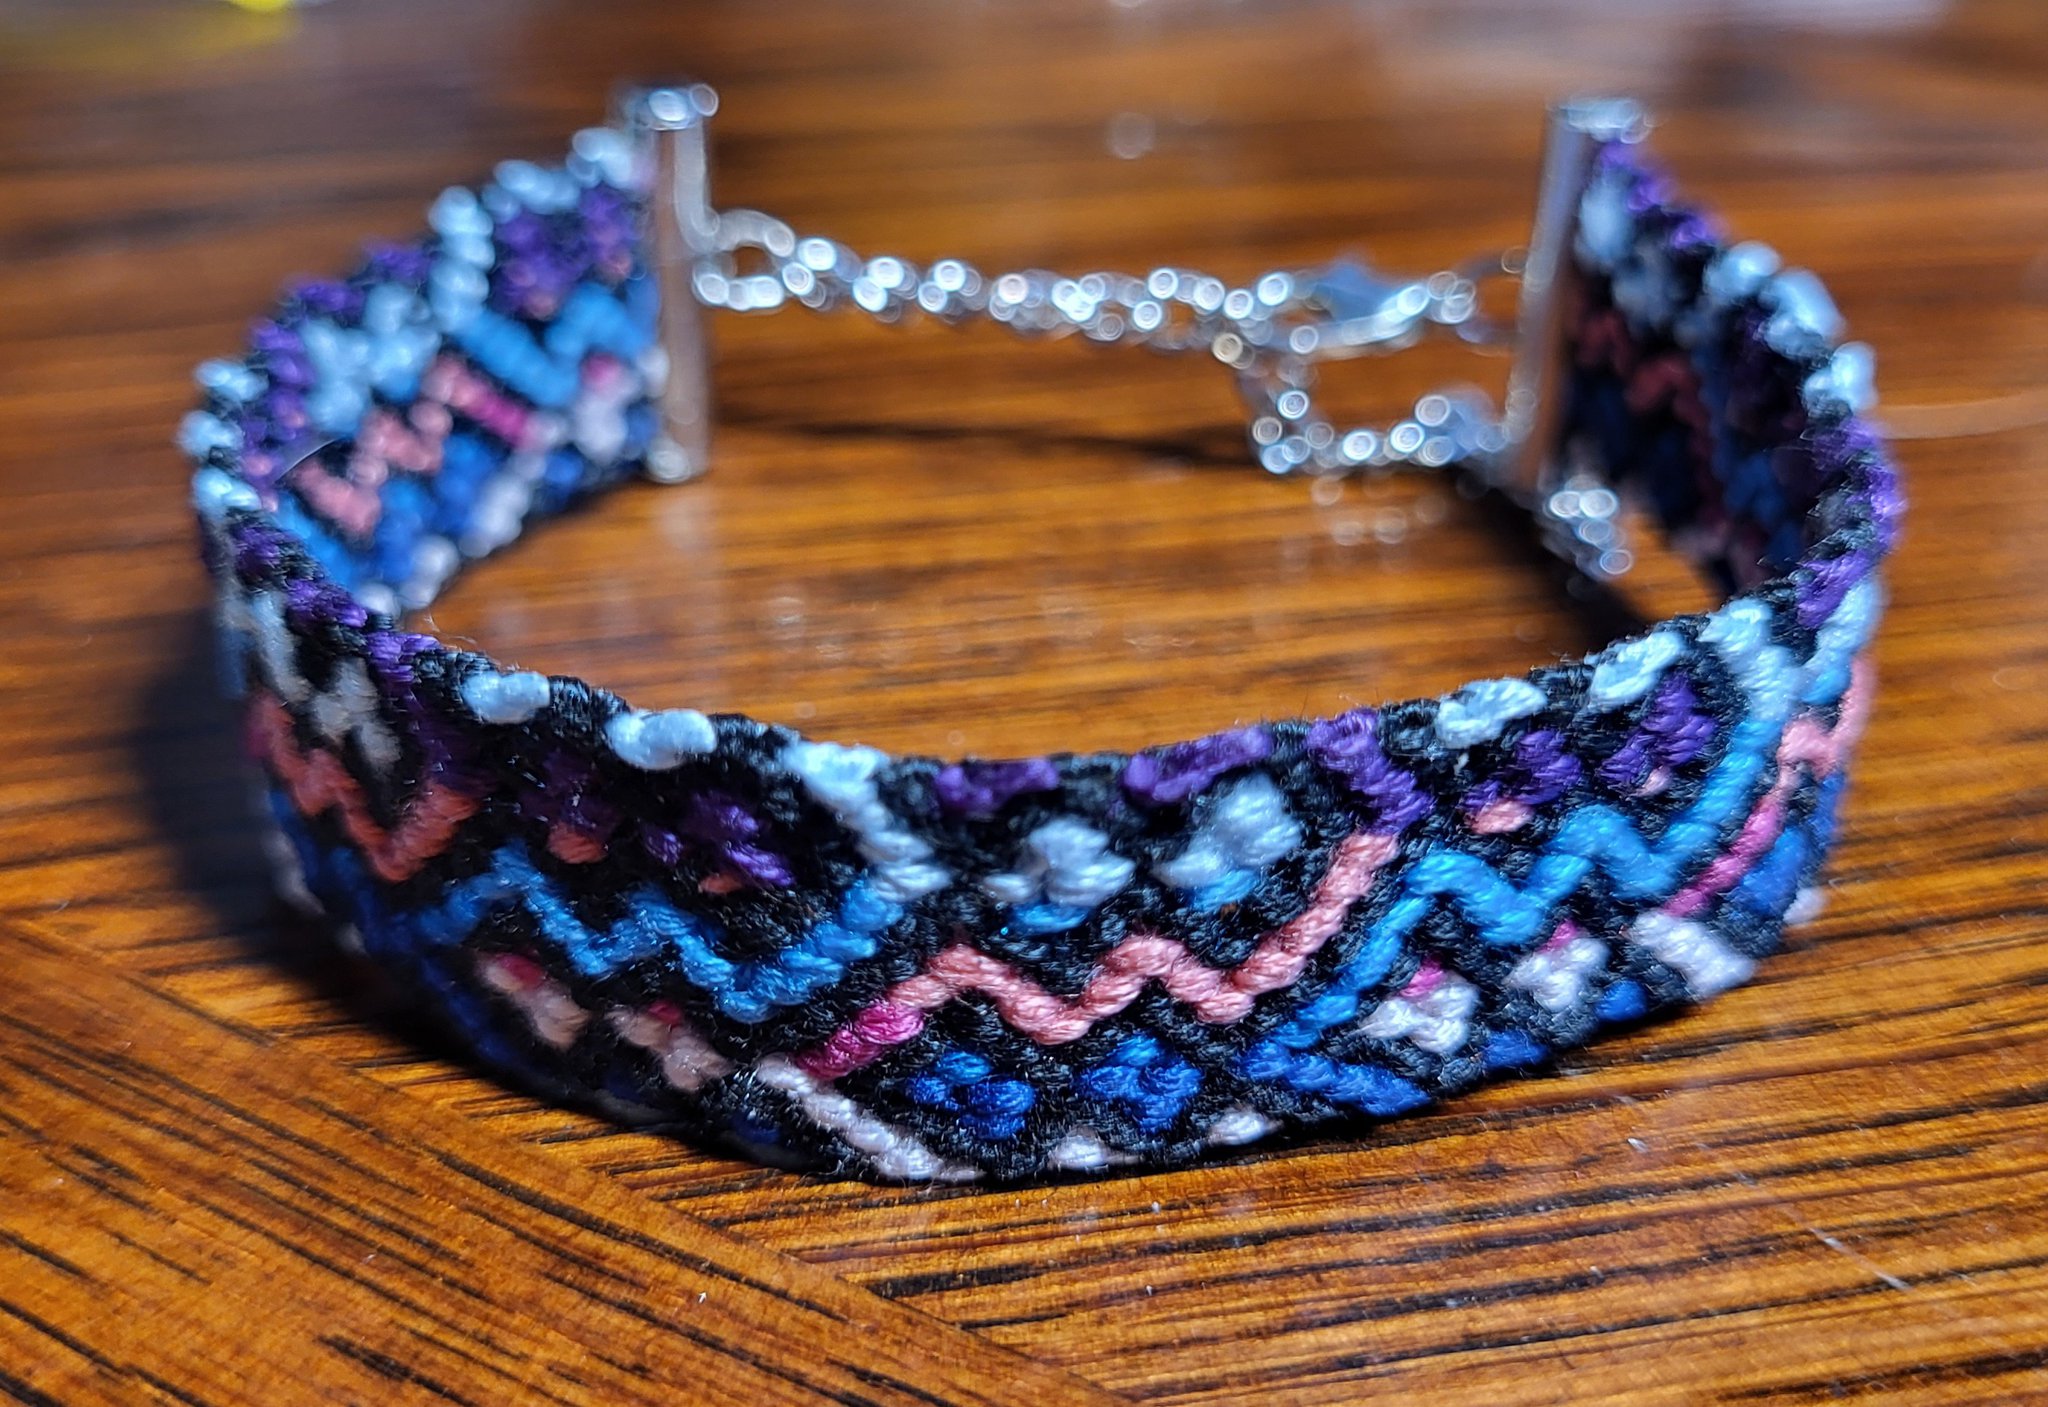 10 Simple DIY Hemp Bracelet Patterns You Have to Try